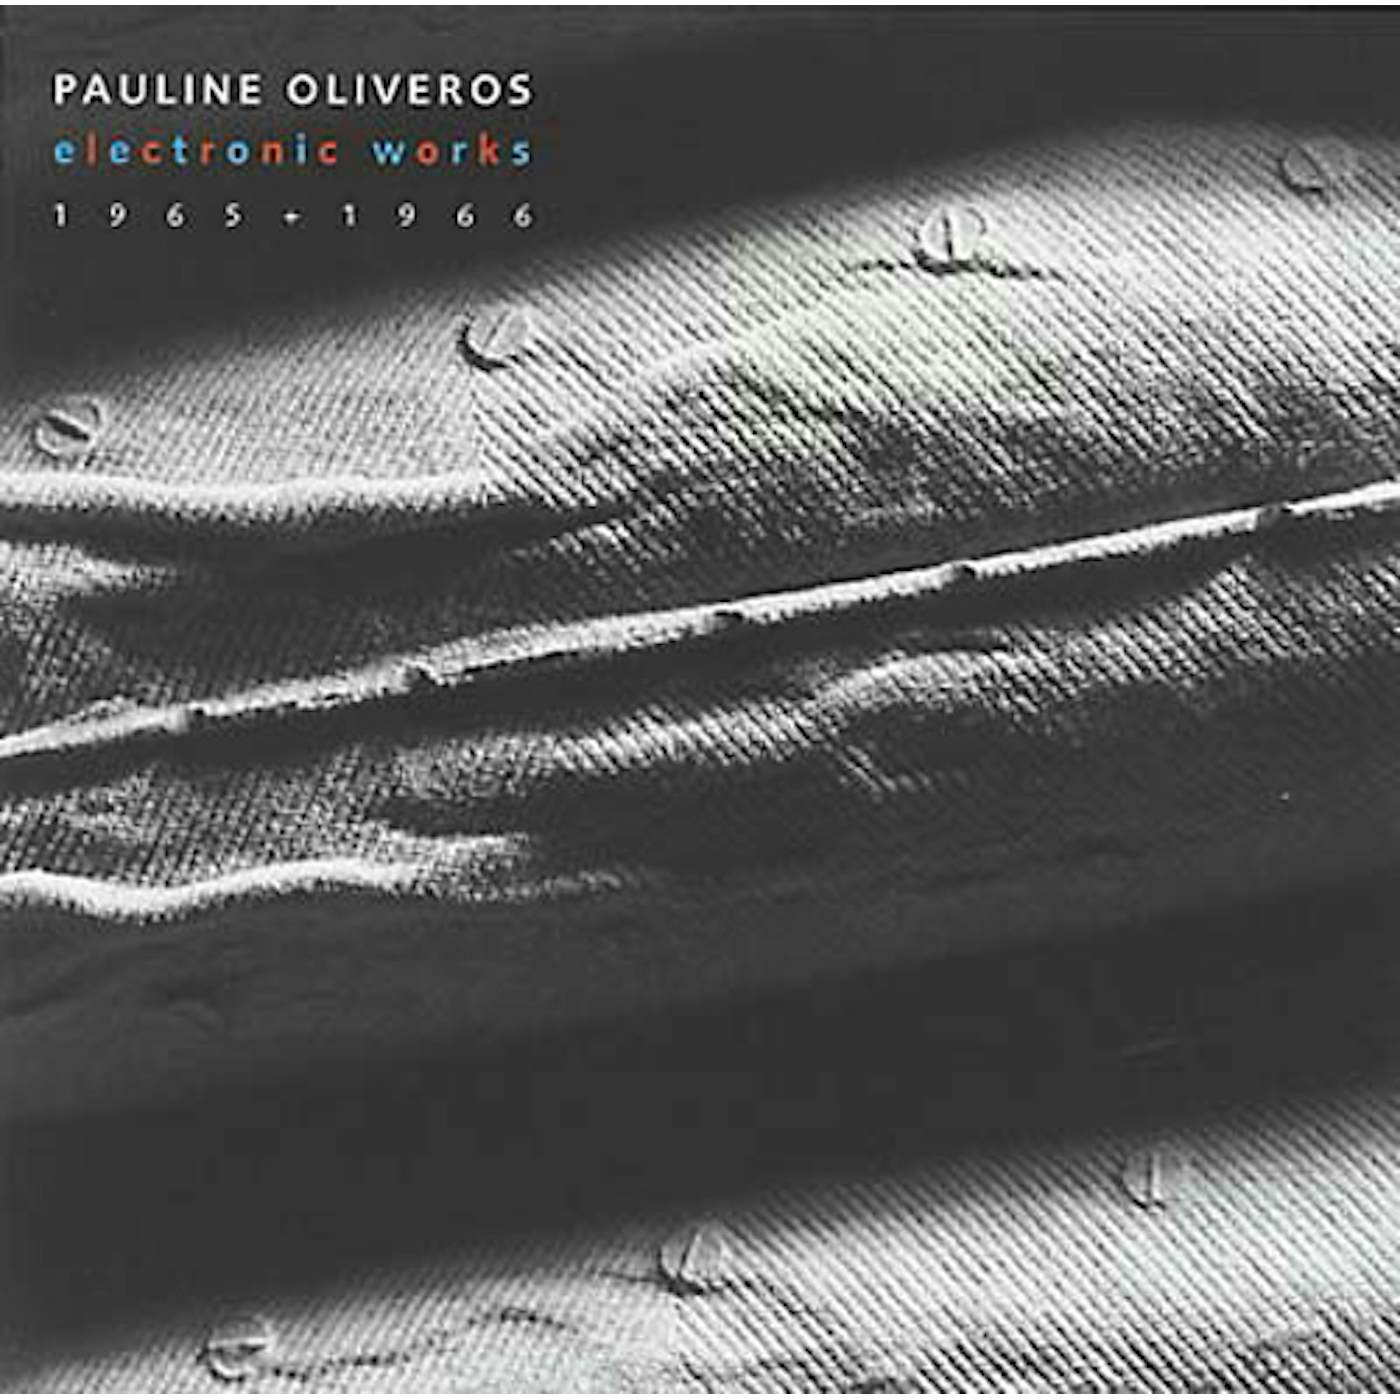 Pauline Oliveros ELECTRONIC WORKS 1965-1966 CD